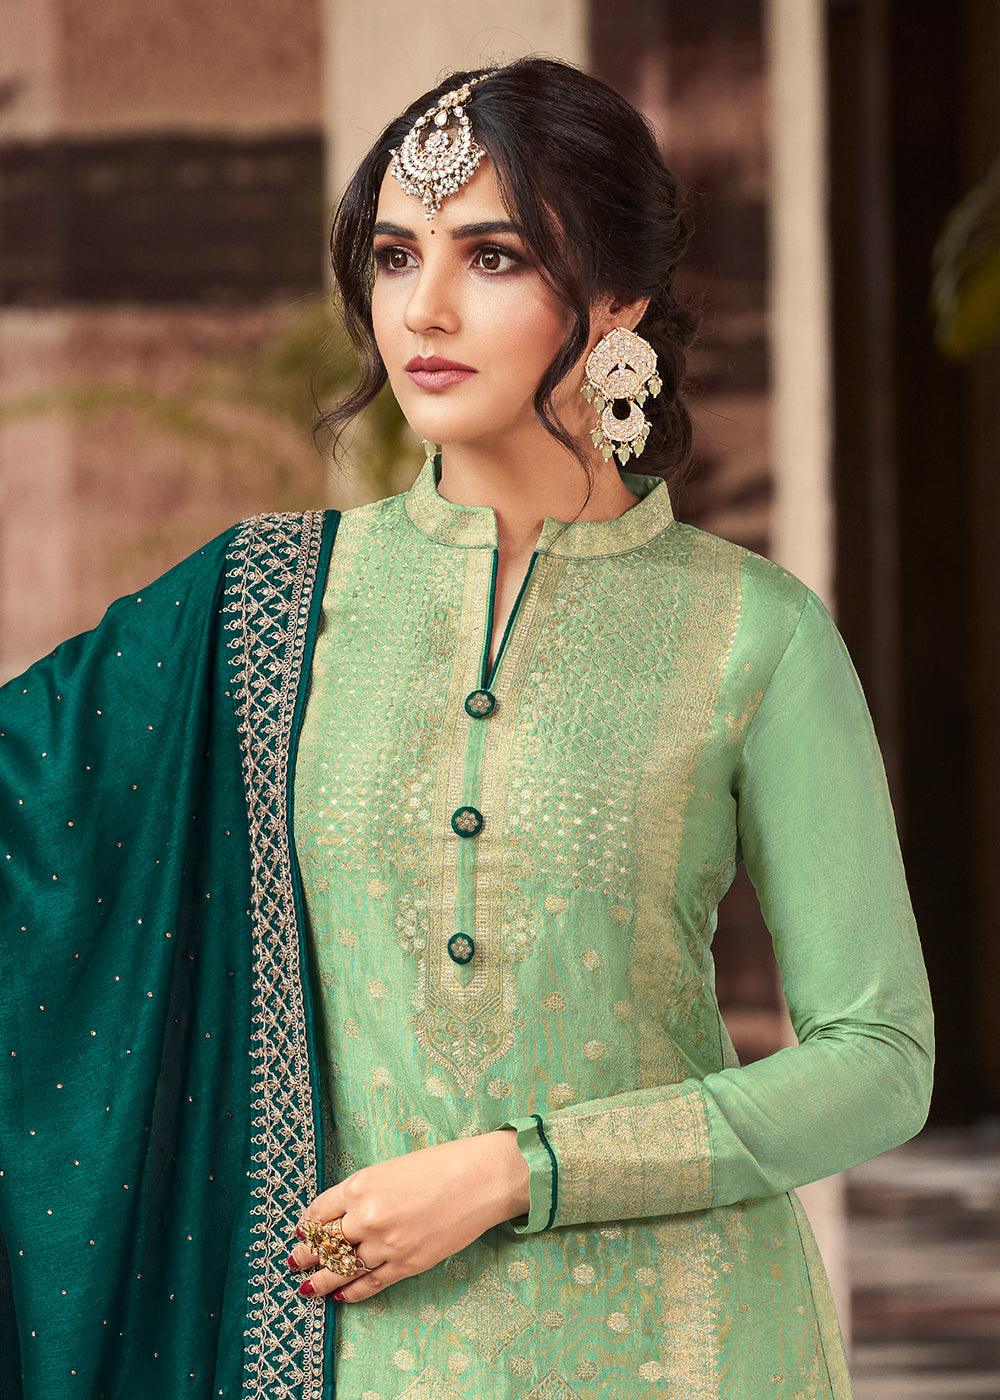 Buy Now Gorgeous Green Dola Silk Jacquard Festival Salwar Kameez Online in USA, UK, Canada & Worldwide at Empress Clothing.